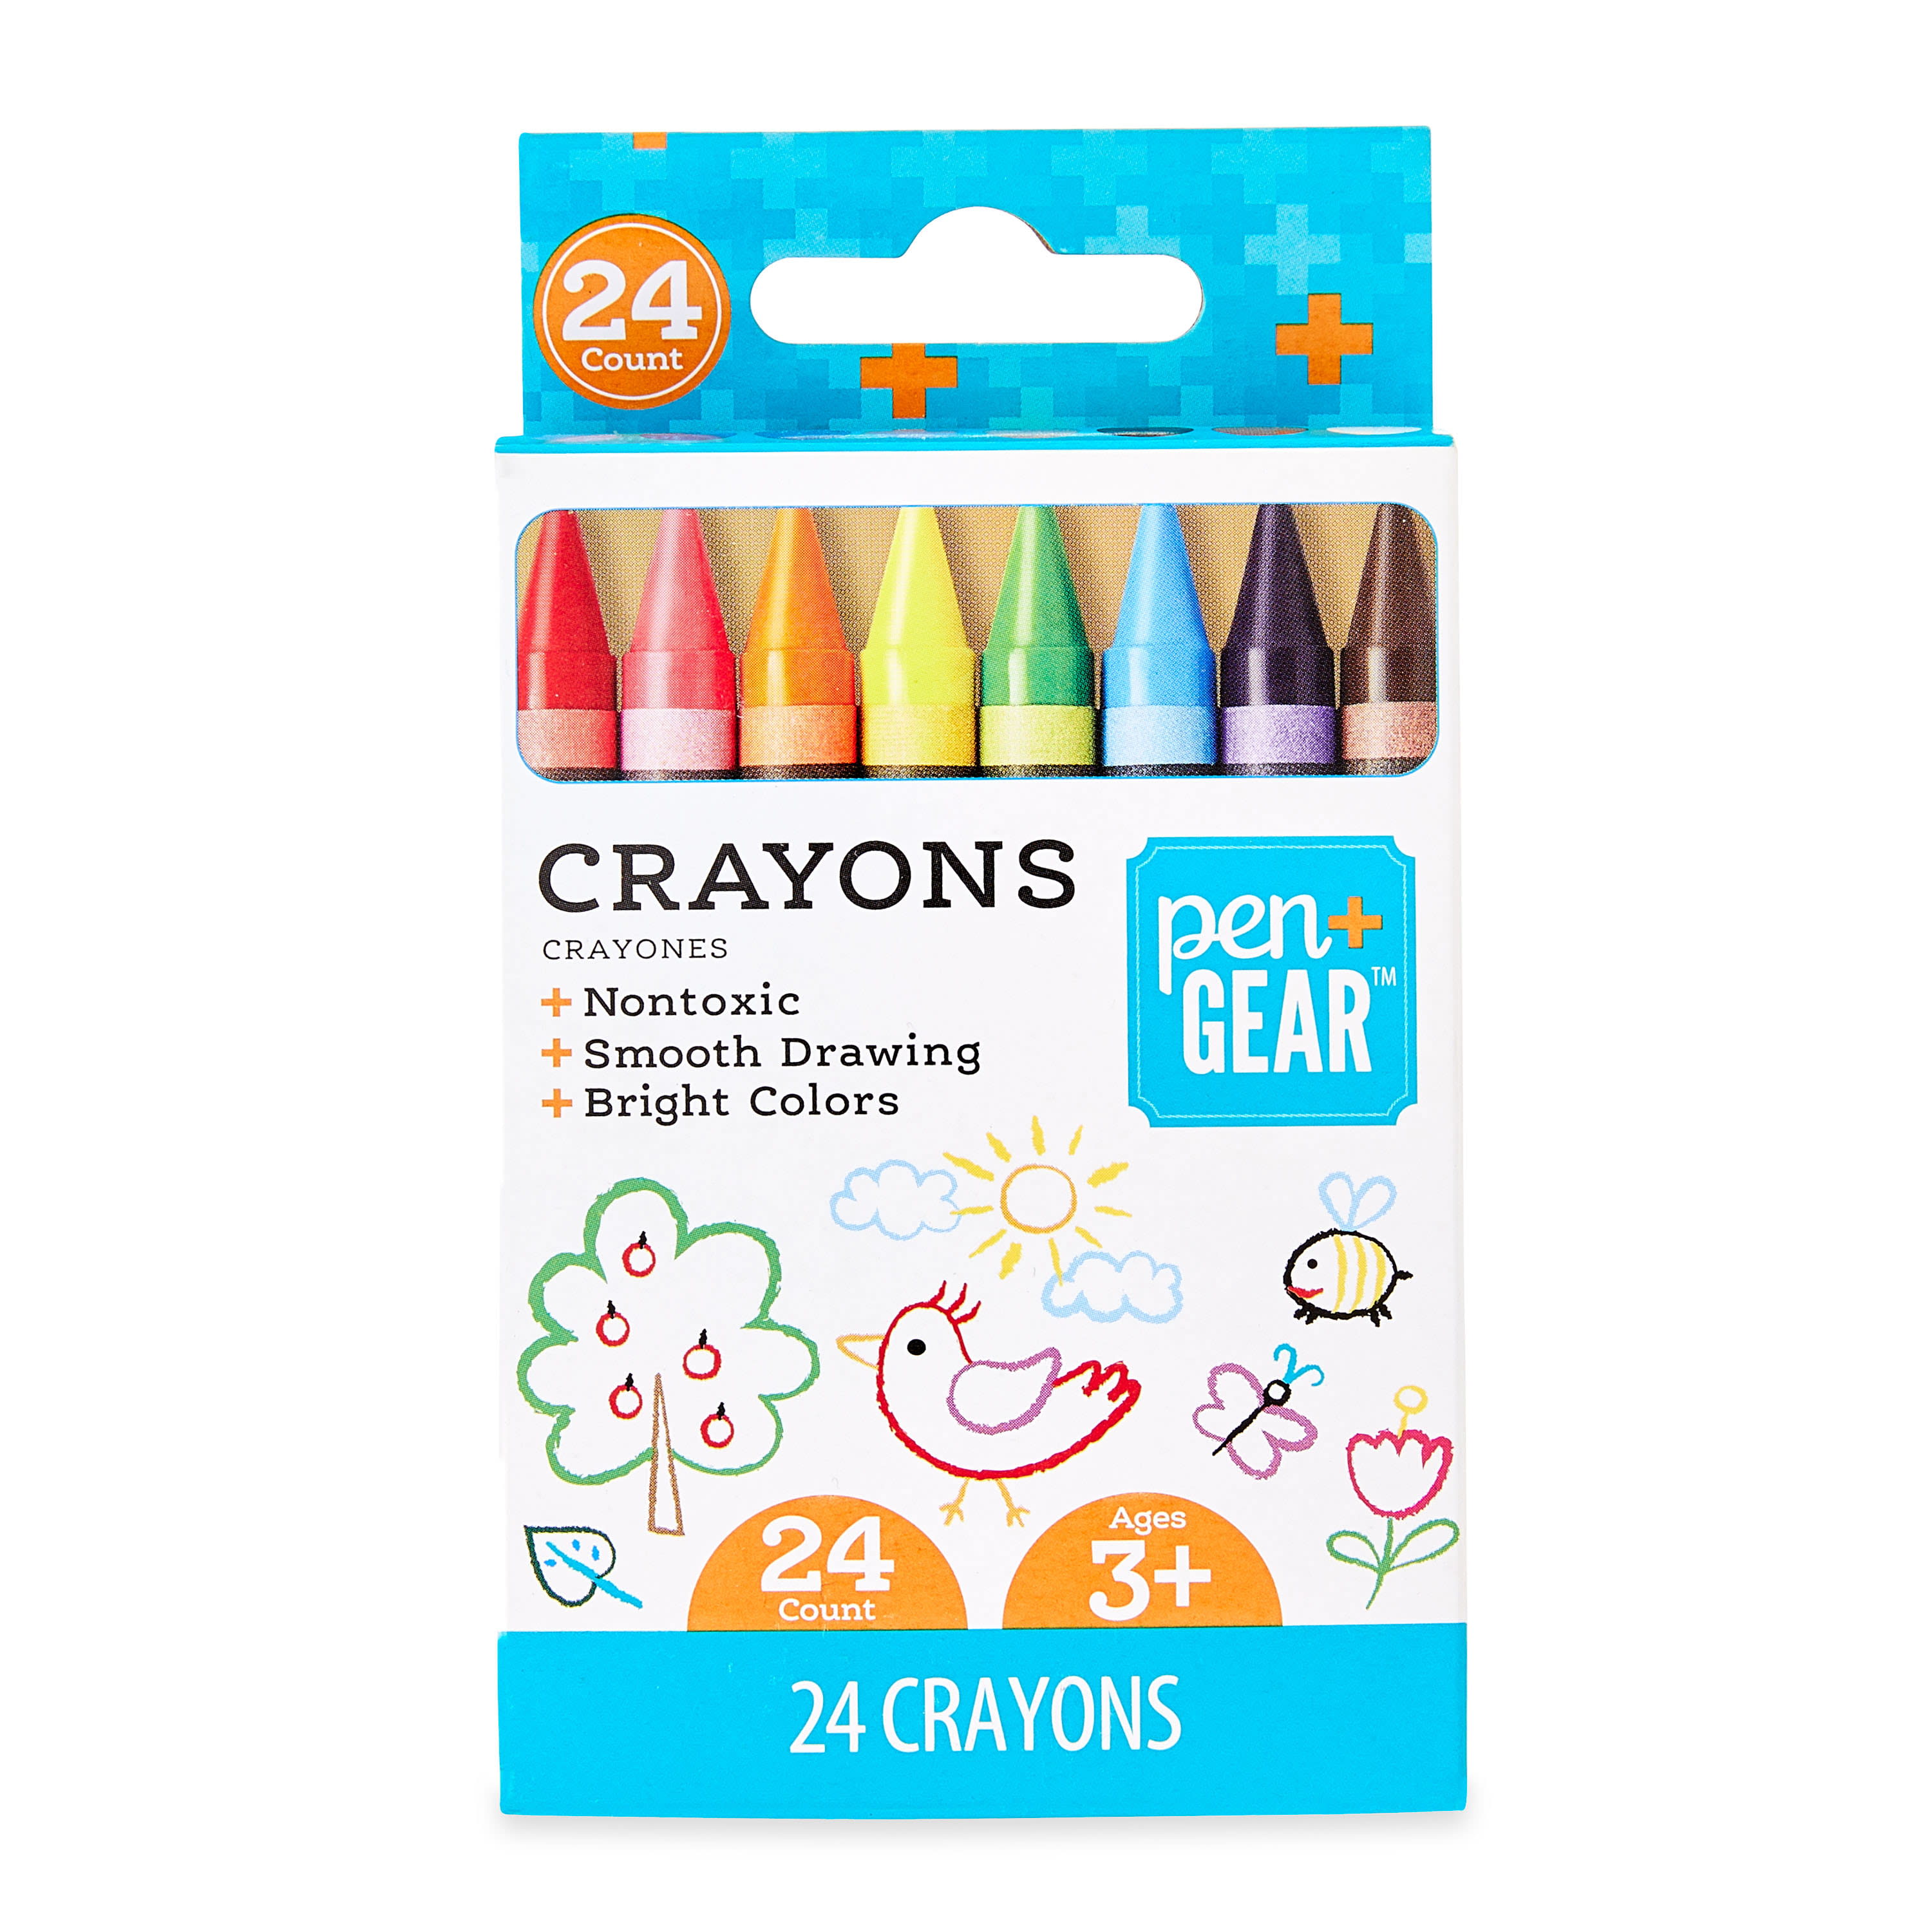 Crayola - Giant Box of Crayon - Crayola Giant Box of Crayons